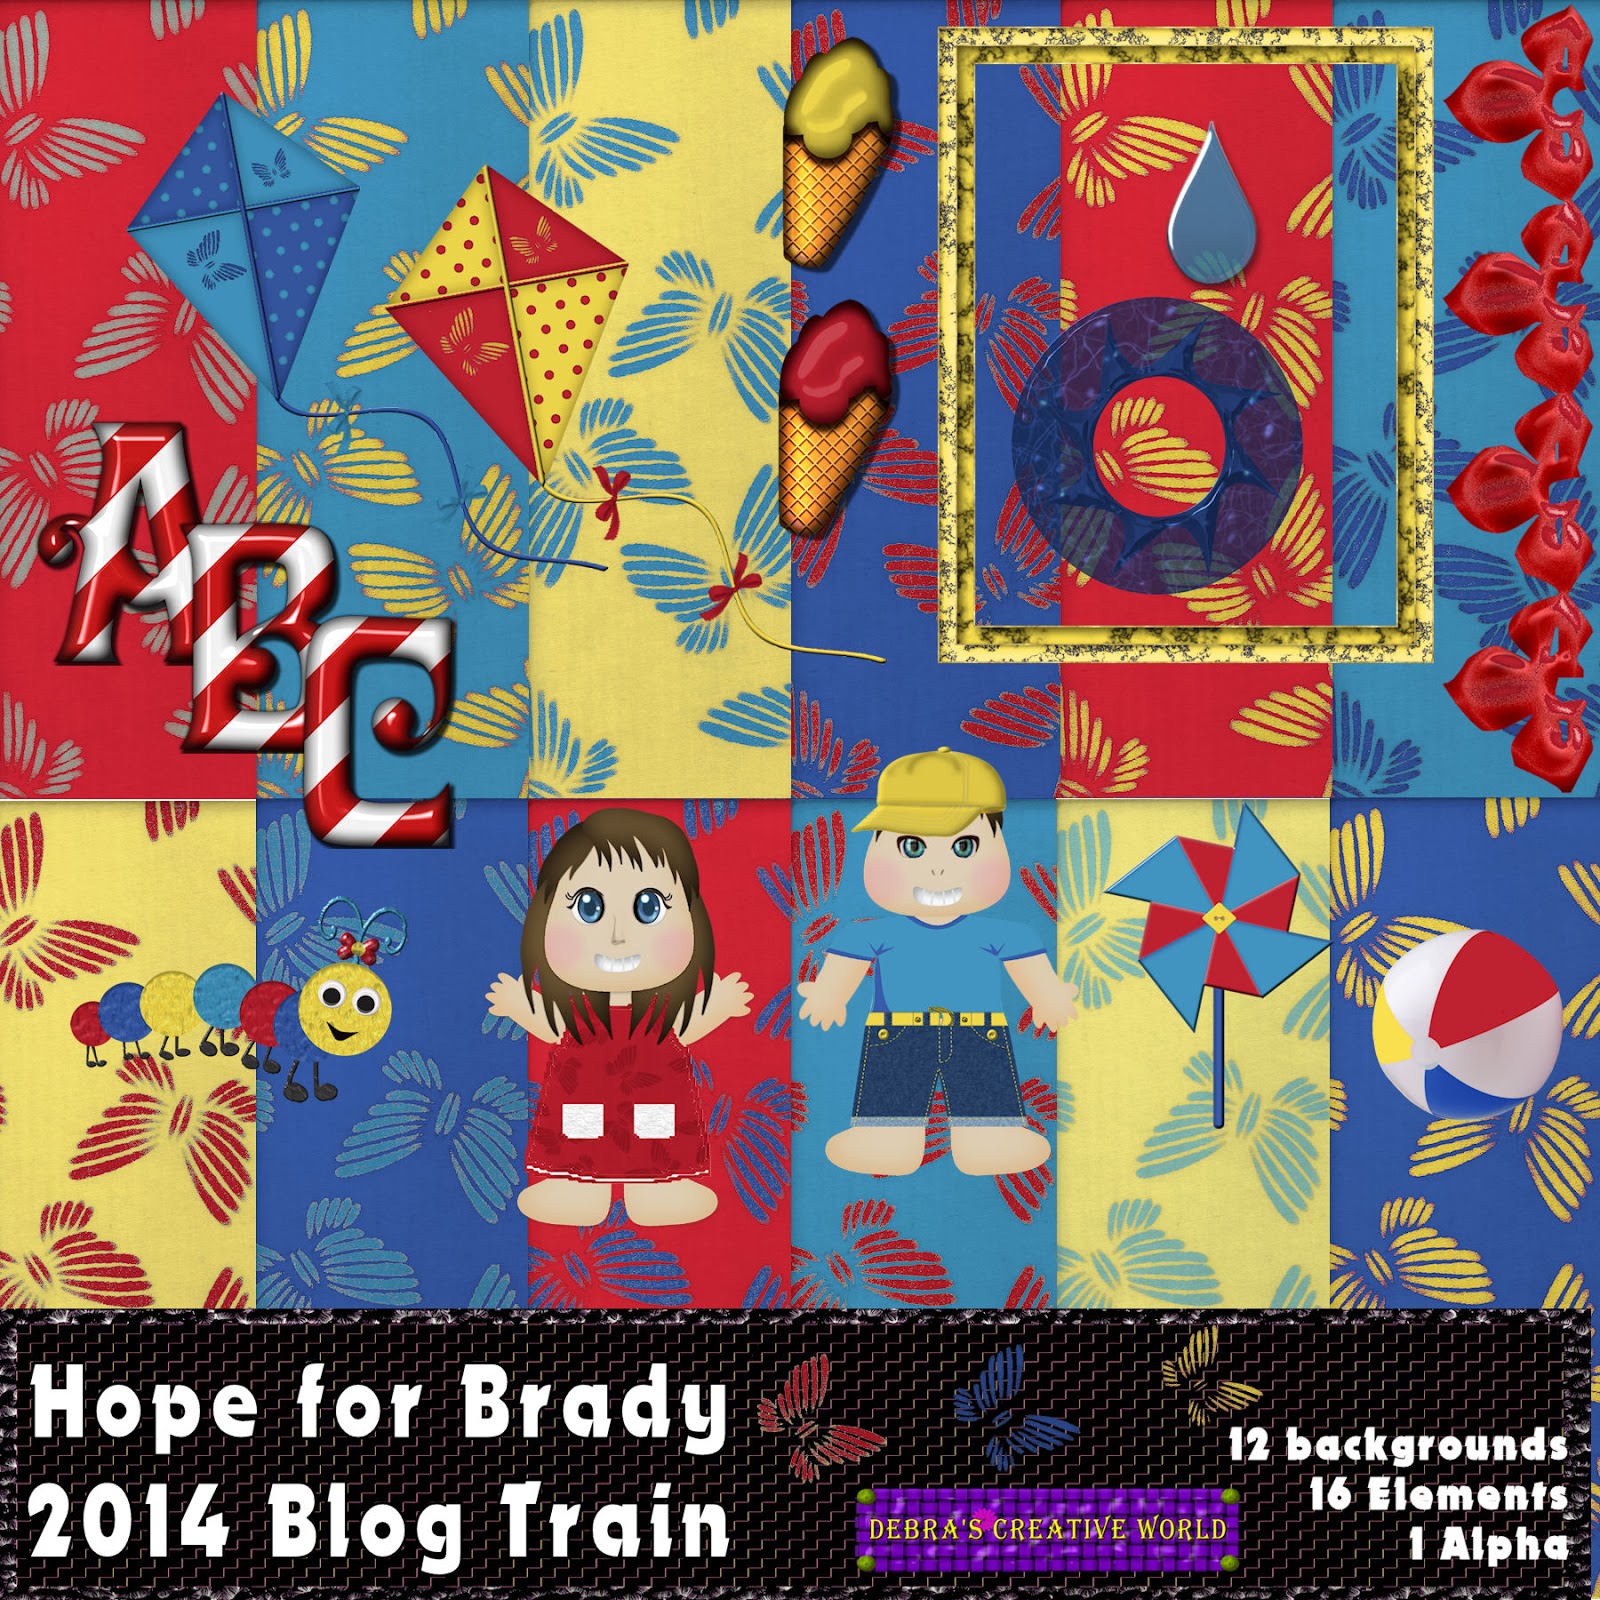 http://4.bp.blogspot.com/-_vFvODWwvCg/Uxs6JPJ0rhI/AAAAAAAAA3M/lImRjziyrhU/s1600/2014+Hope+for+Brady+Blog+Train.jpg